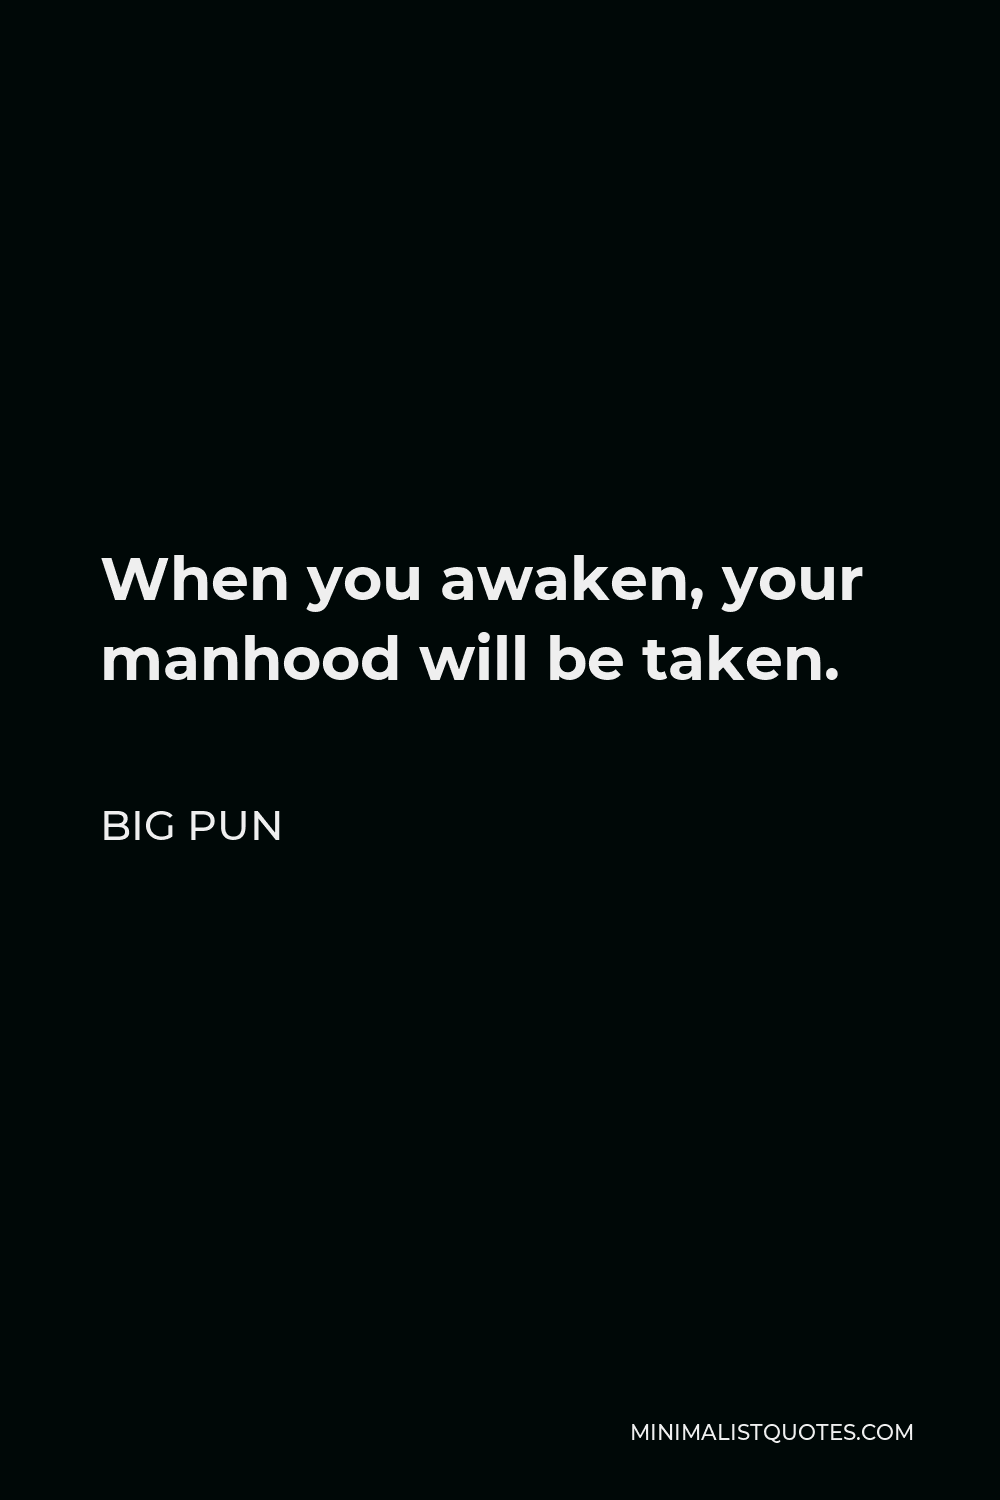 Big Pun Quote - When you awaken, your manhood will be taken.